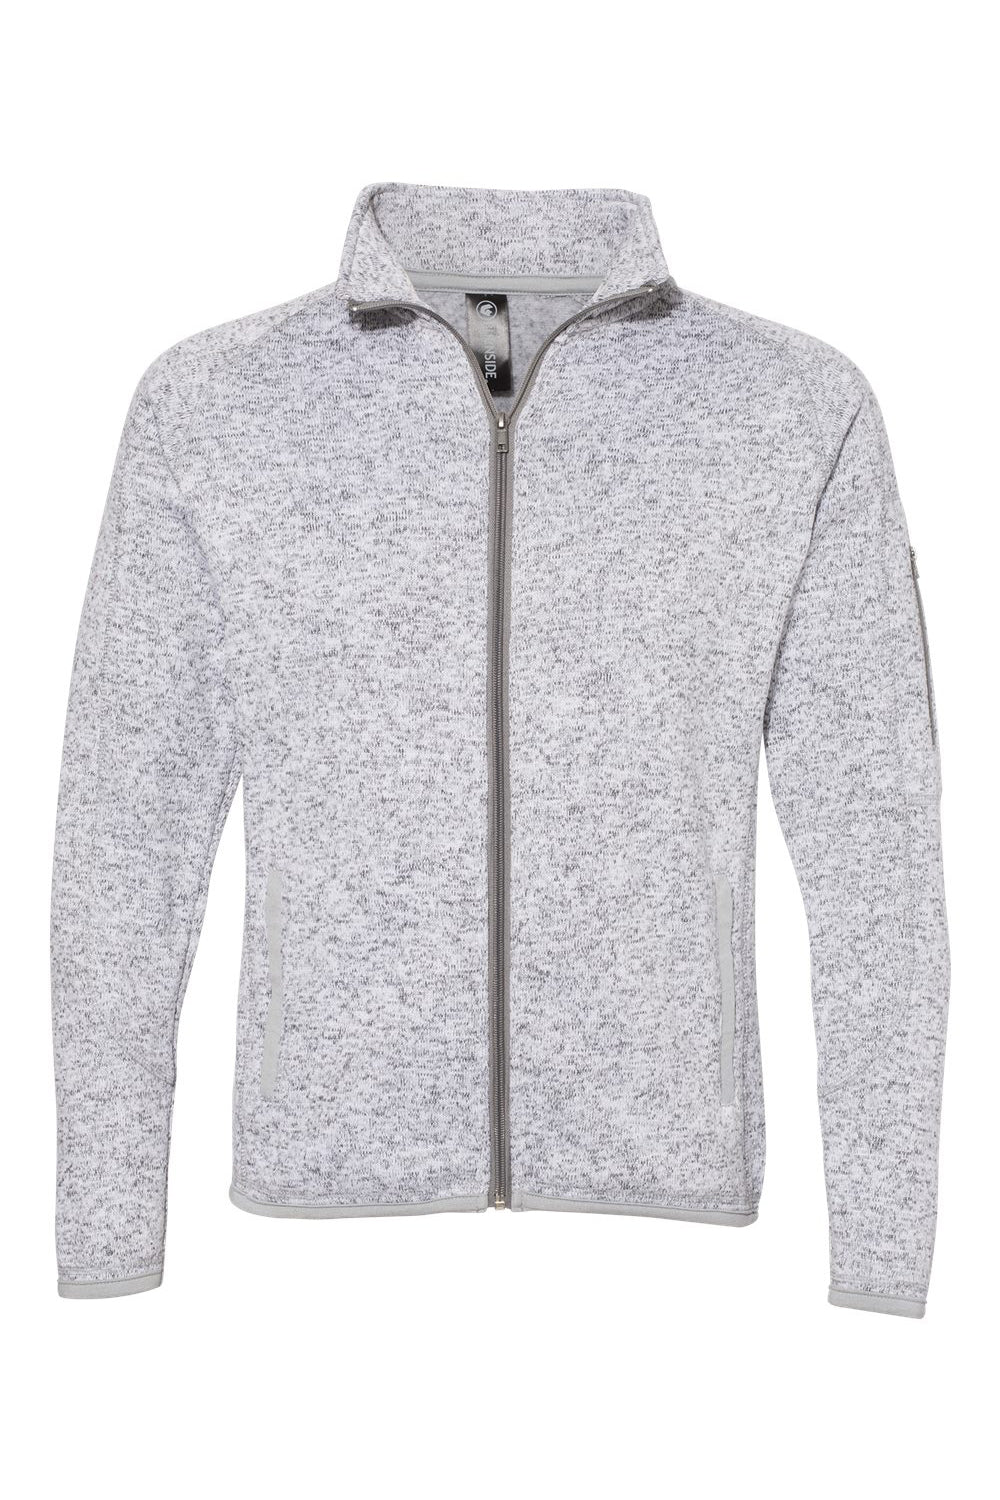 Burnside 5901 Womens Sweater Knit Full Zip Jacket Heather Grey Flat Front